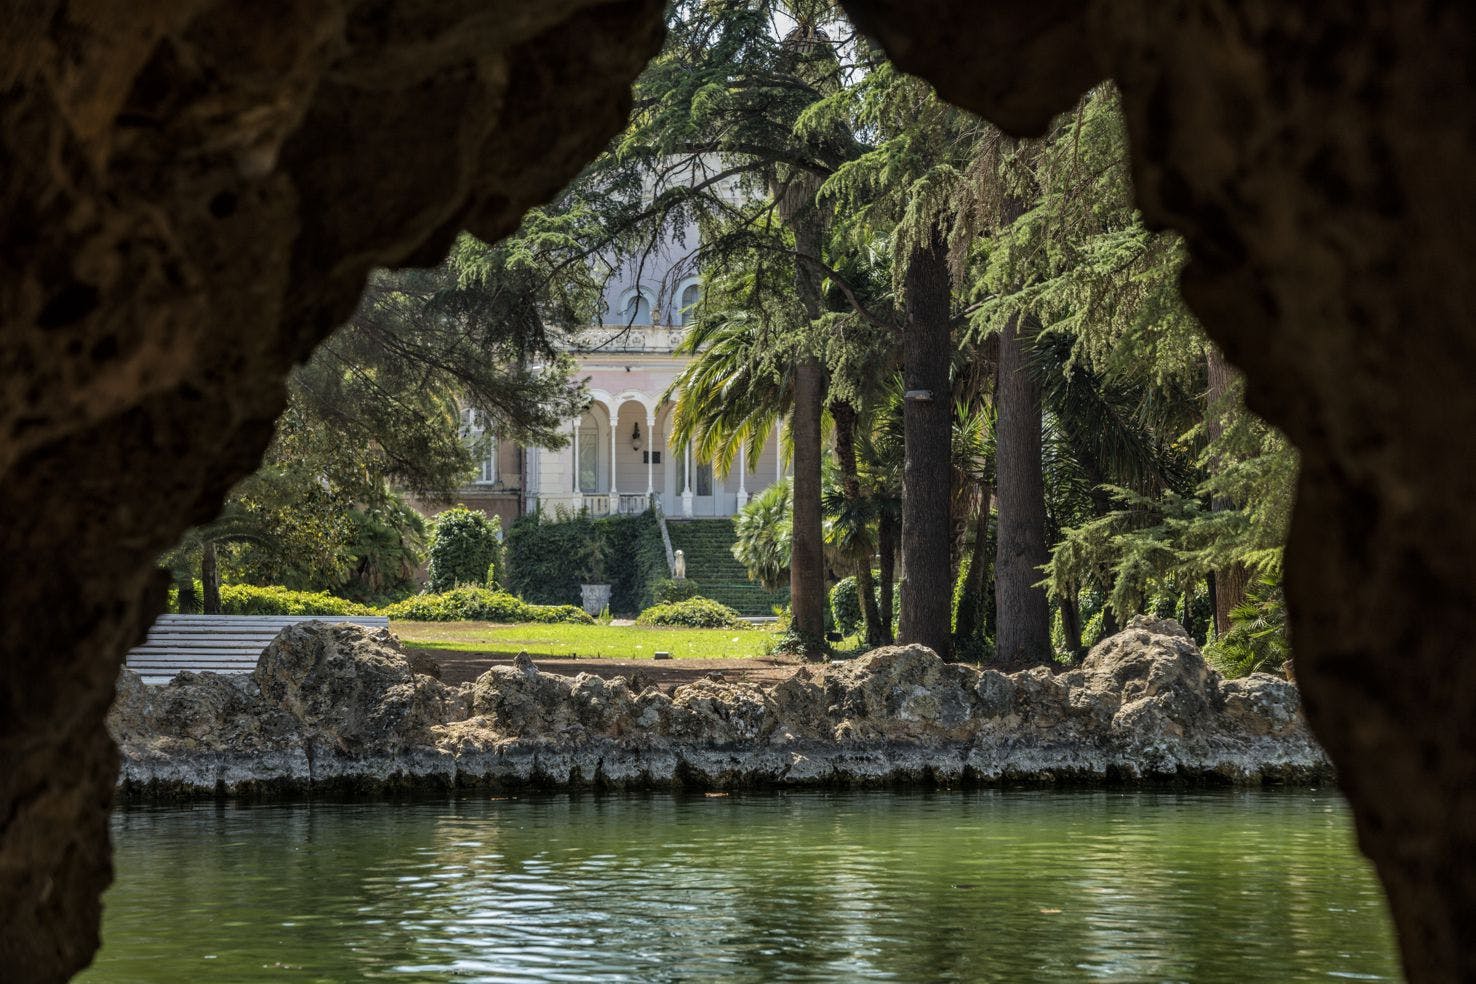 III European Day Of Historic Gardens: “Gardens that Inspire: Literature and Historic Gardens”